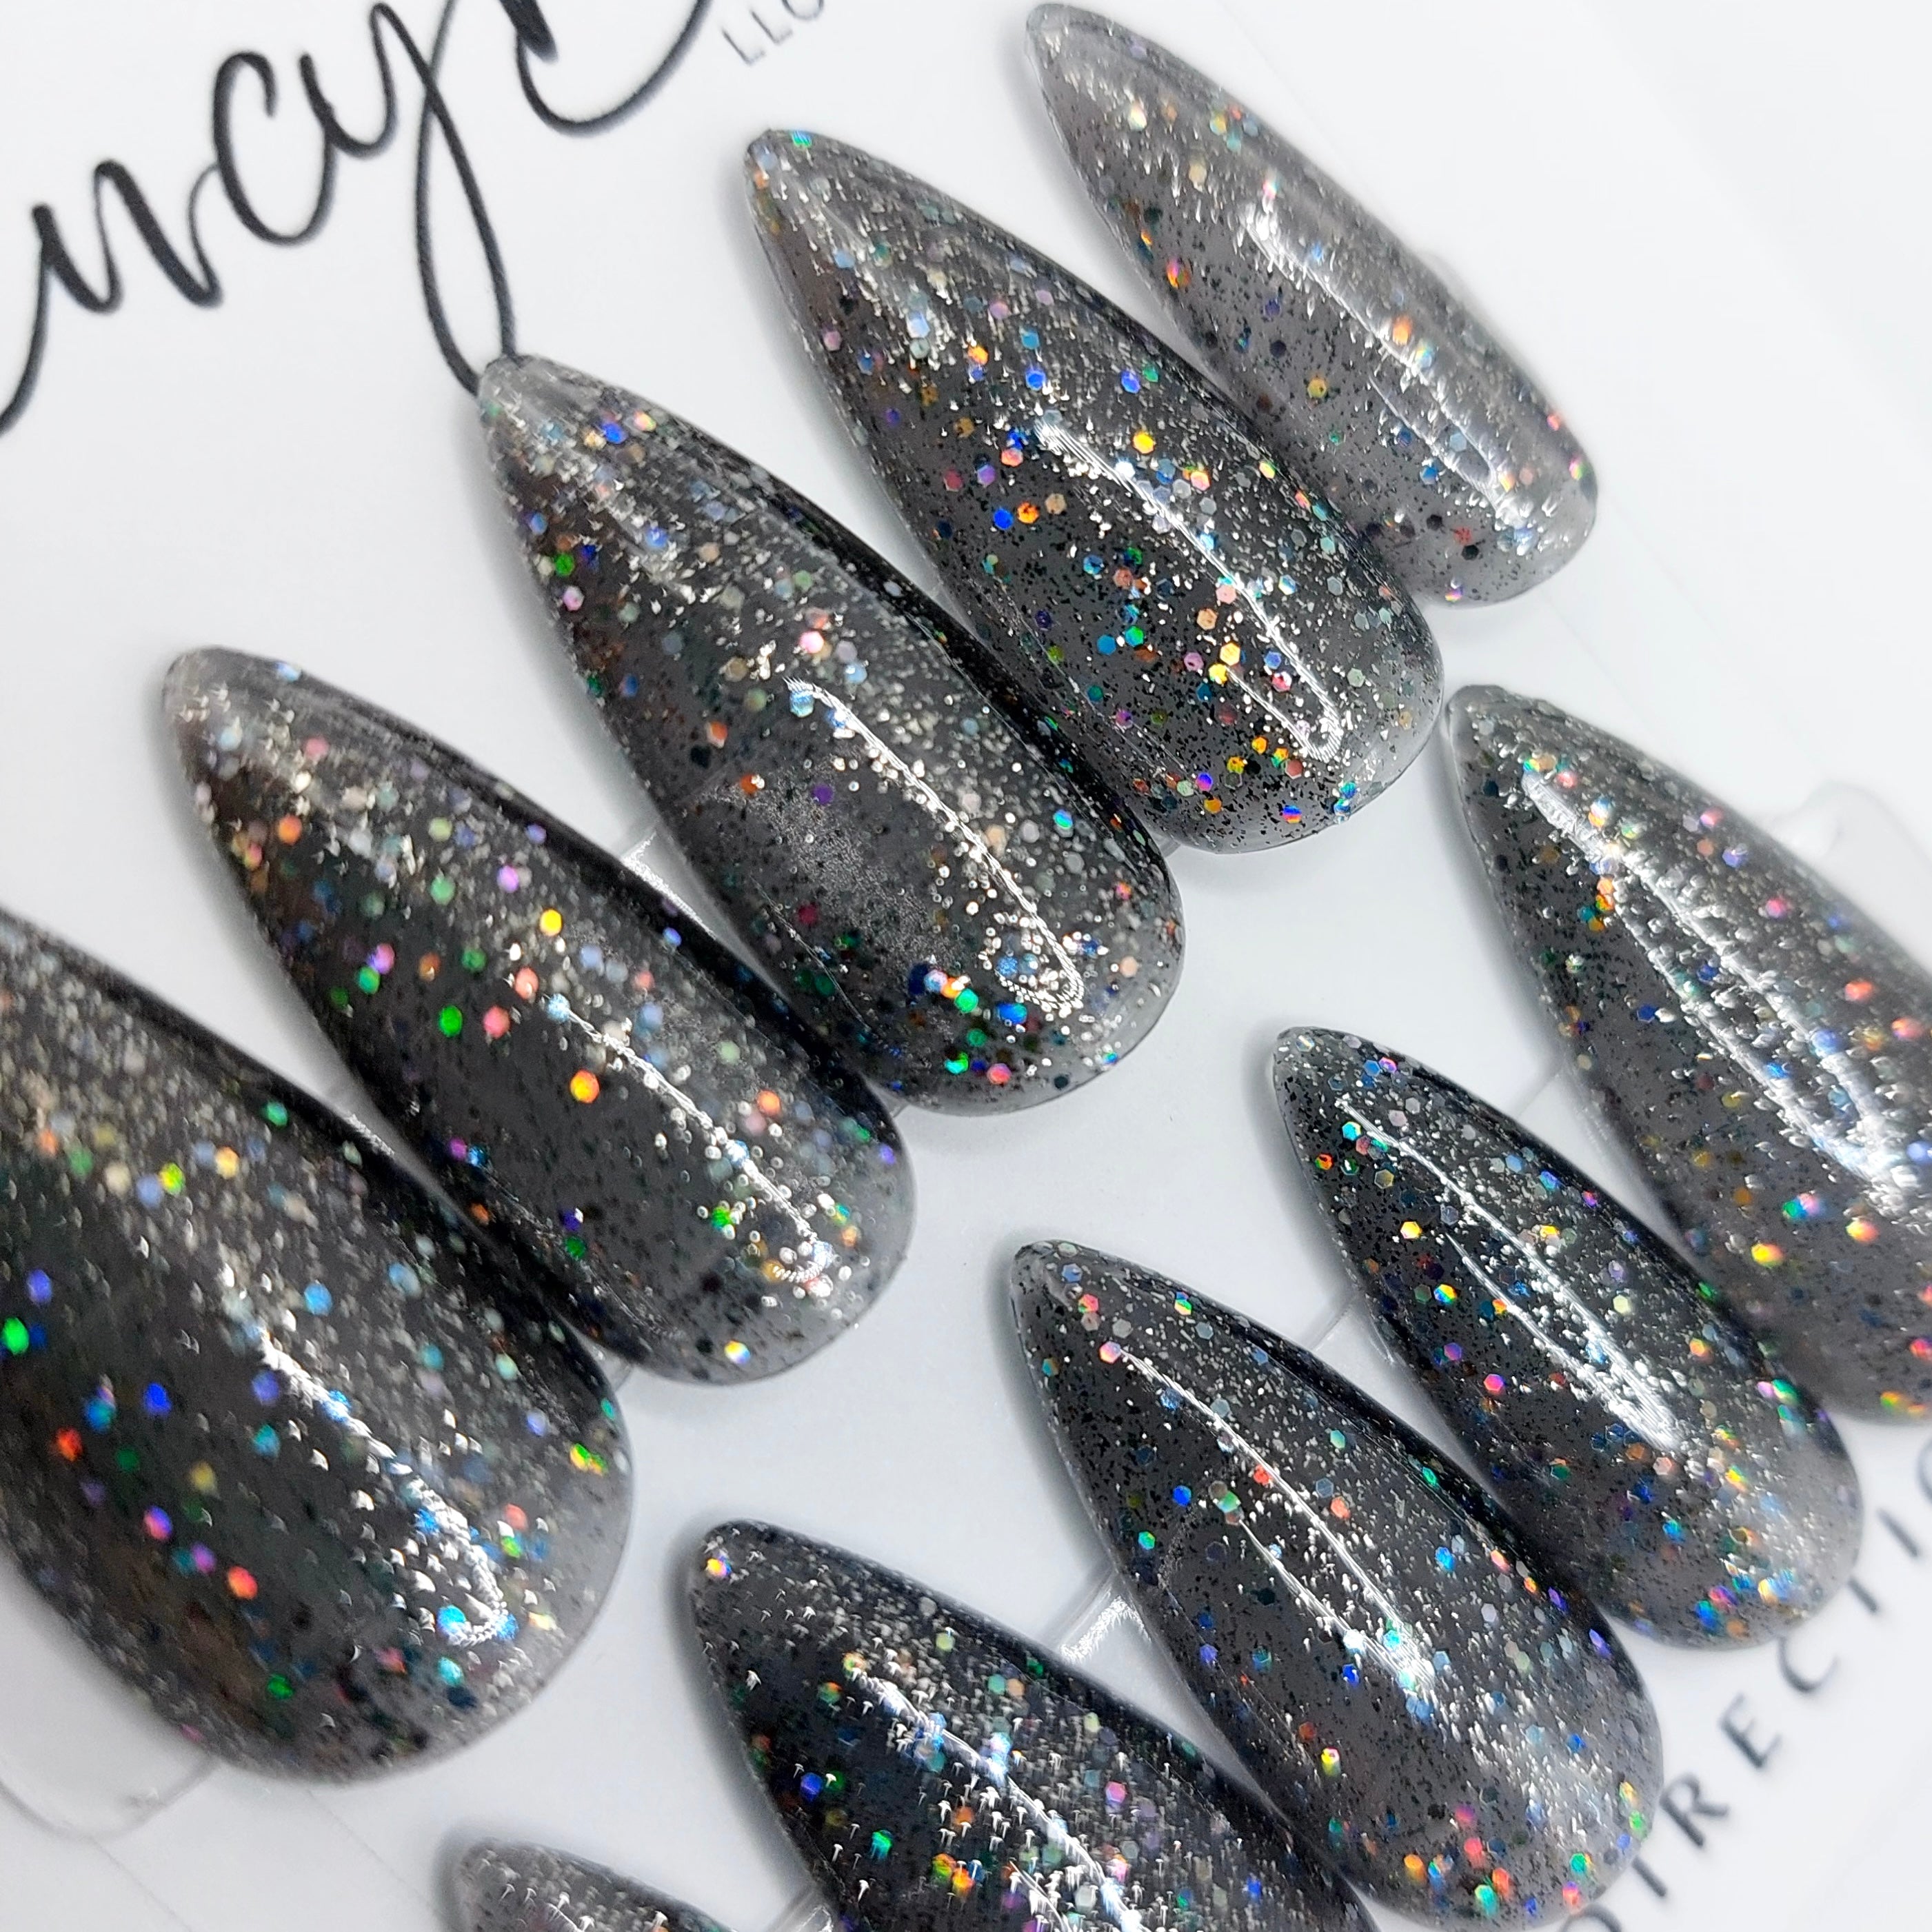 Custom press on nails in a black glitter jelly design and a medium stiletto nail shape. FancyB Nails.